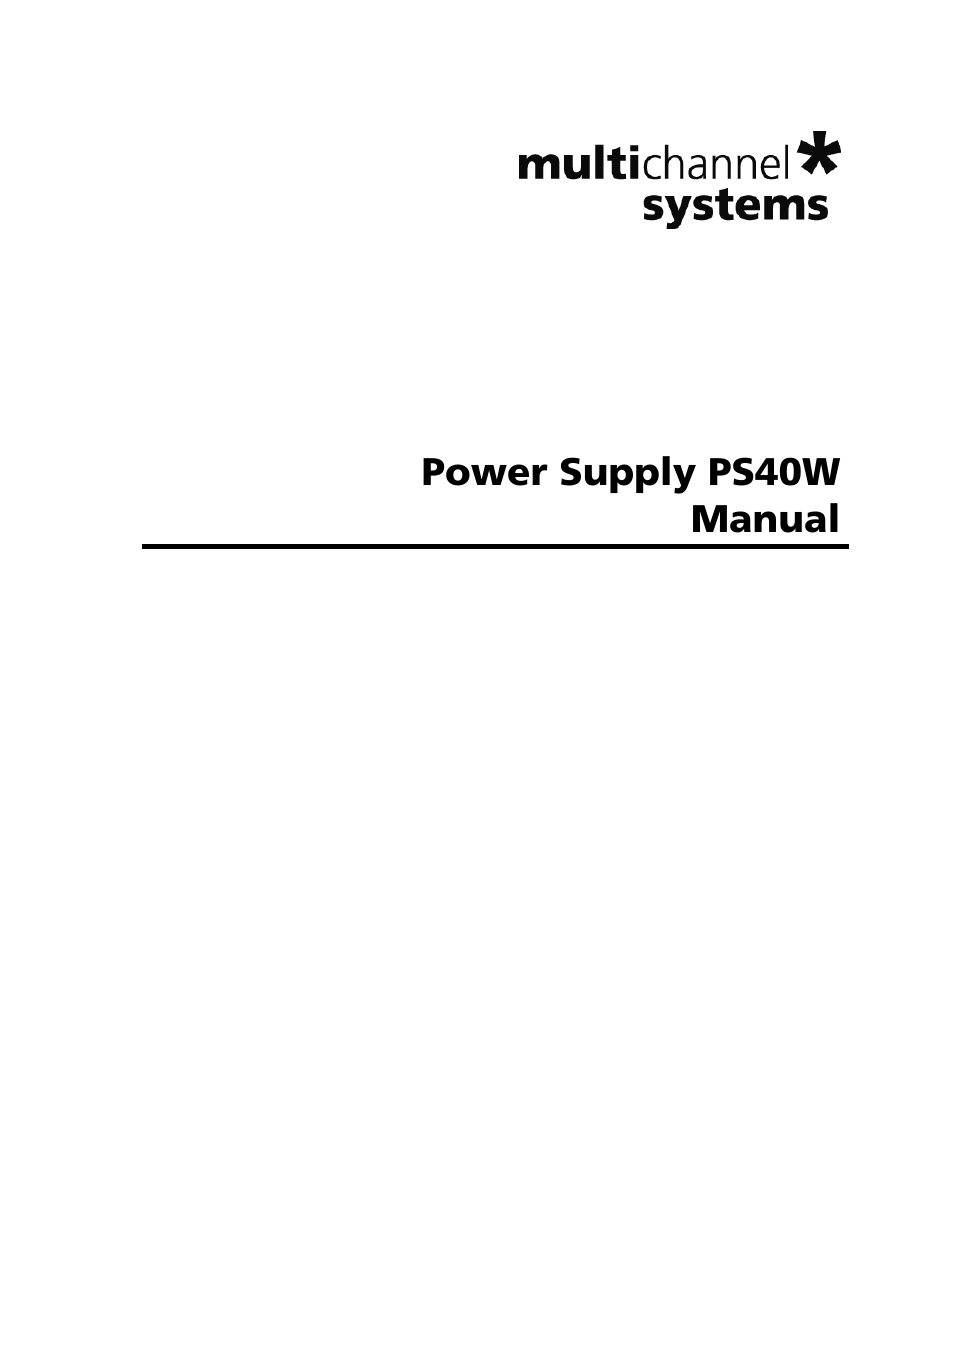 PS40W Manual